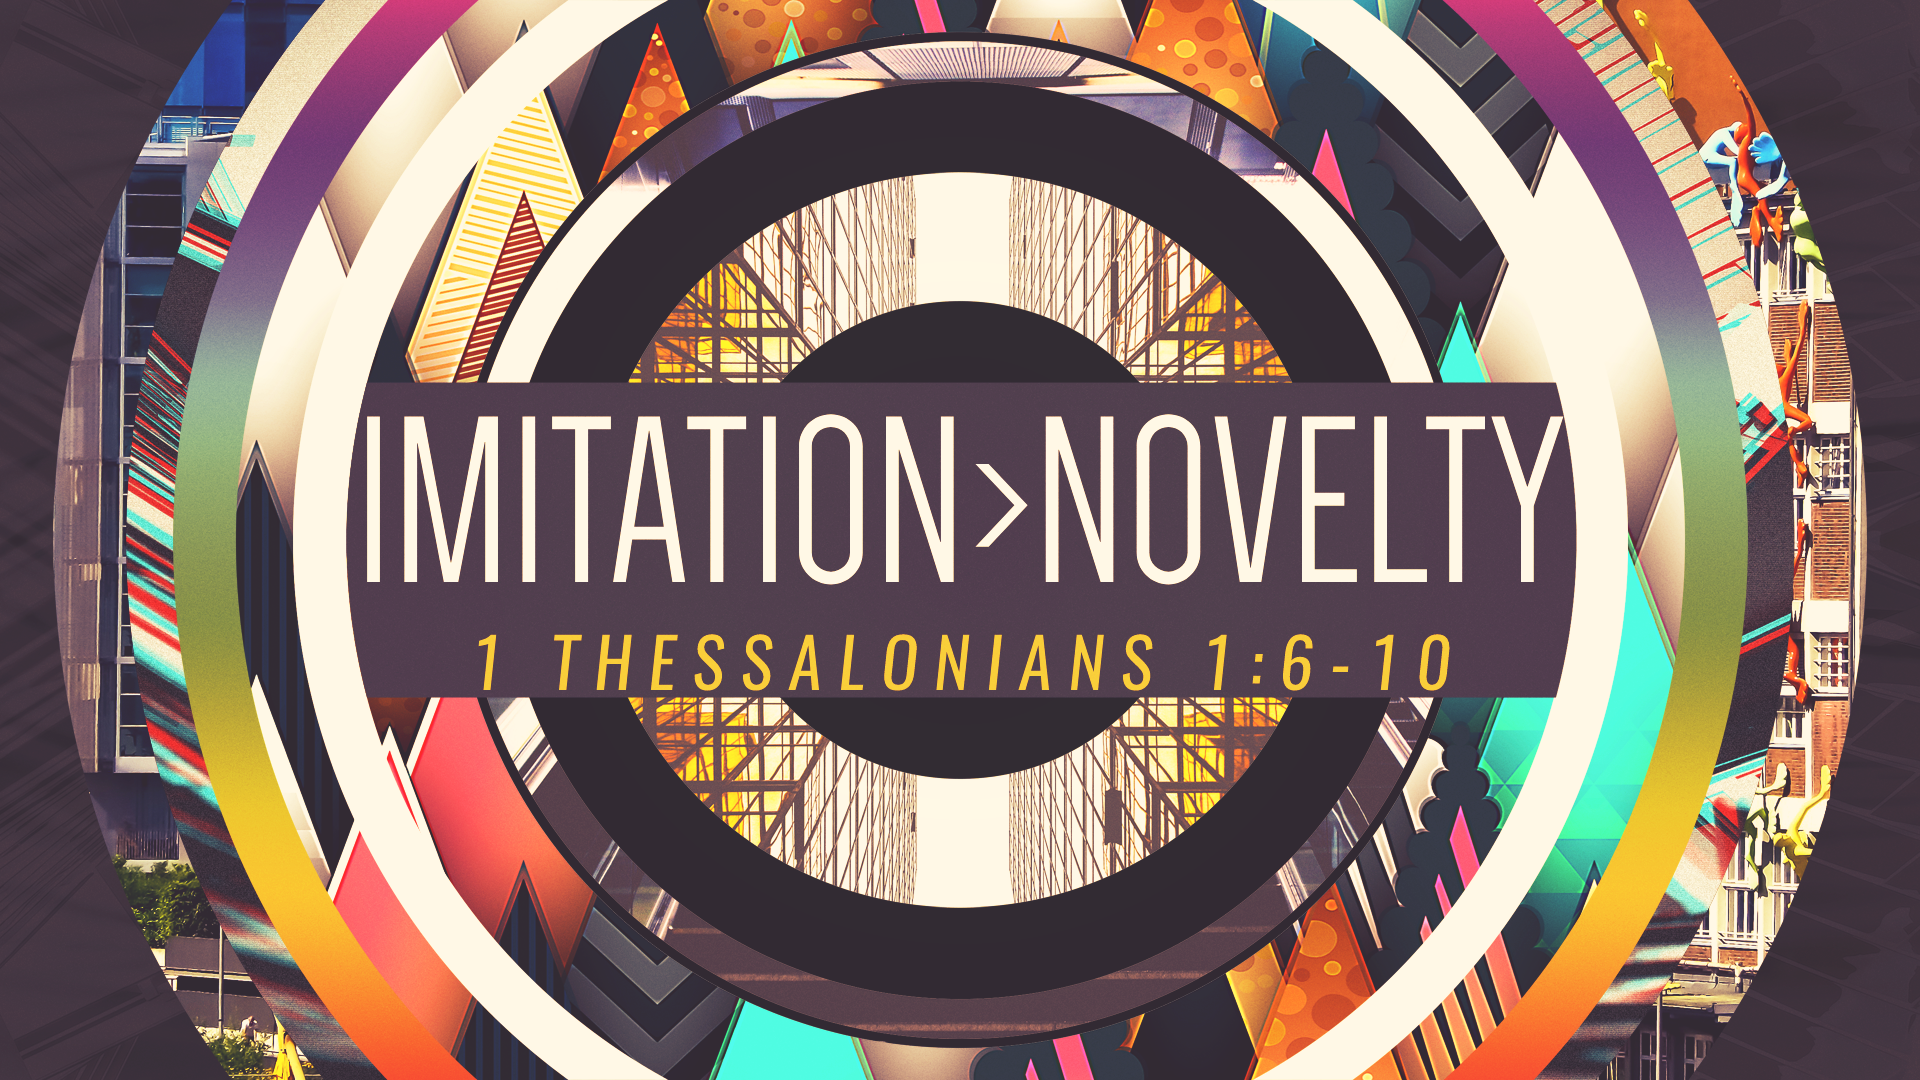 1 Thessalonians 1:6-10